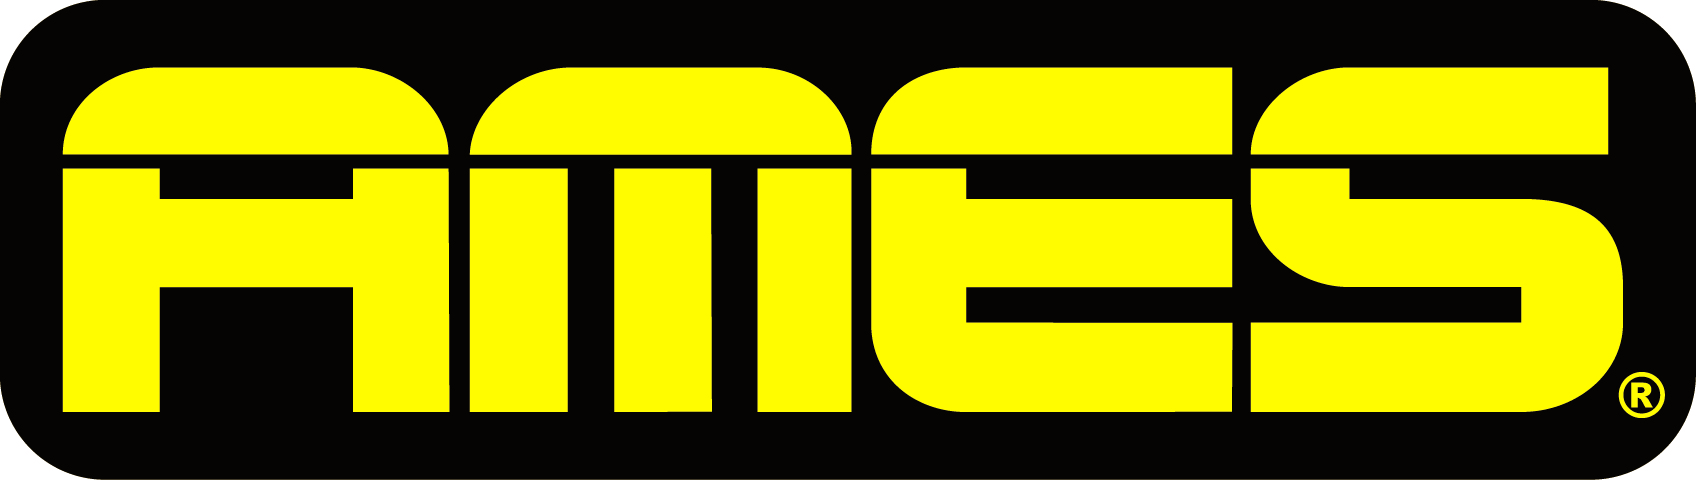 AMES Logo